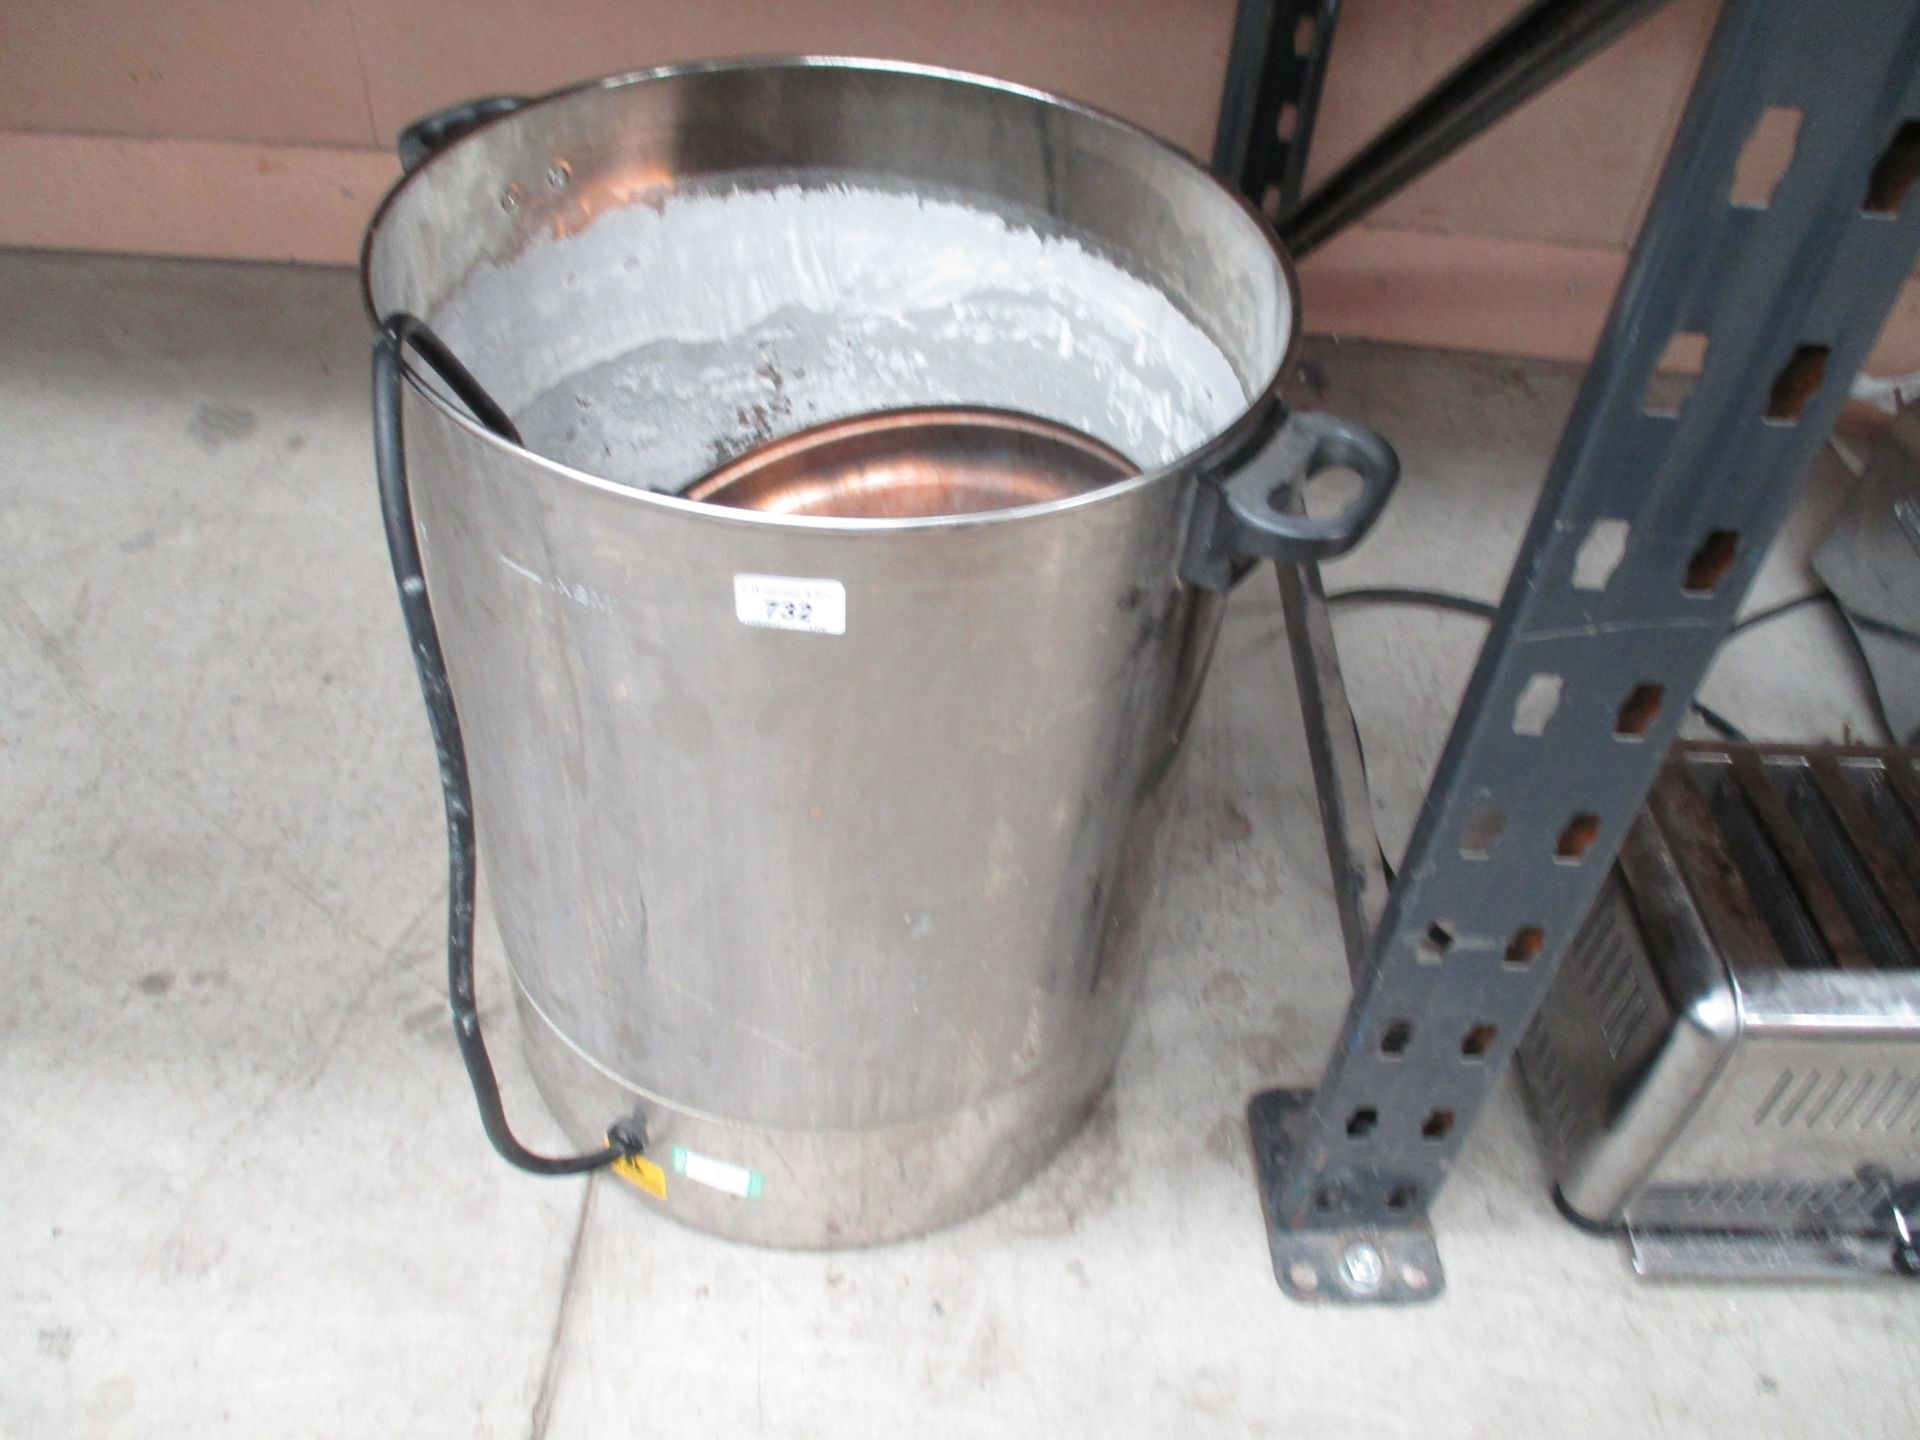 A Buffalo stainless steel hot water boiler - 240v